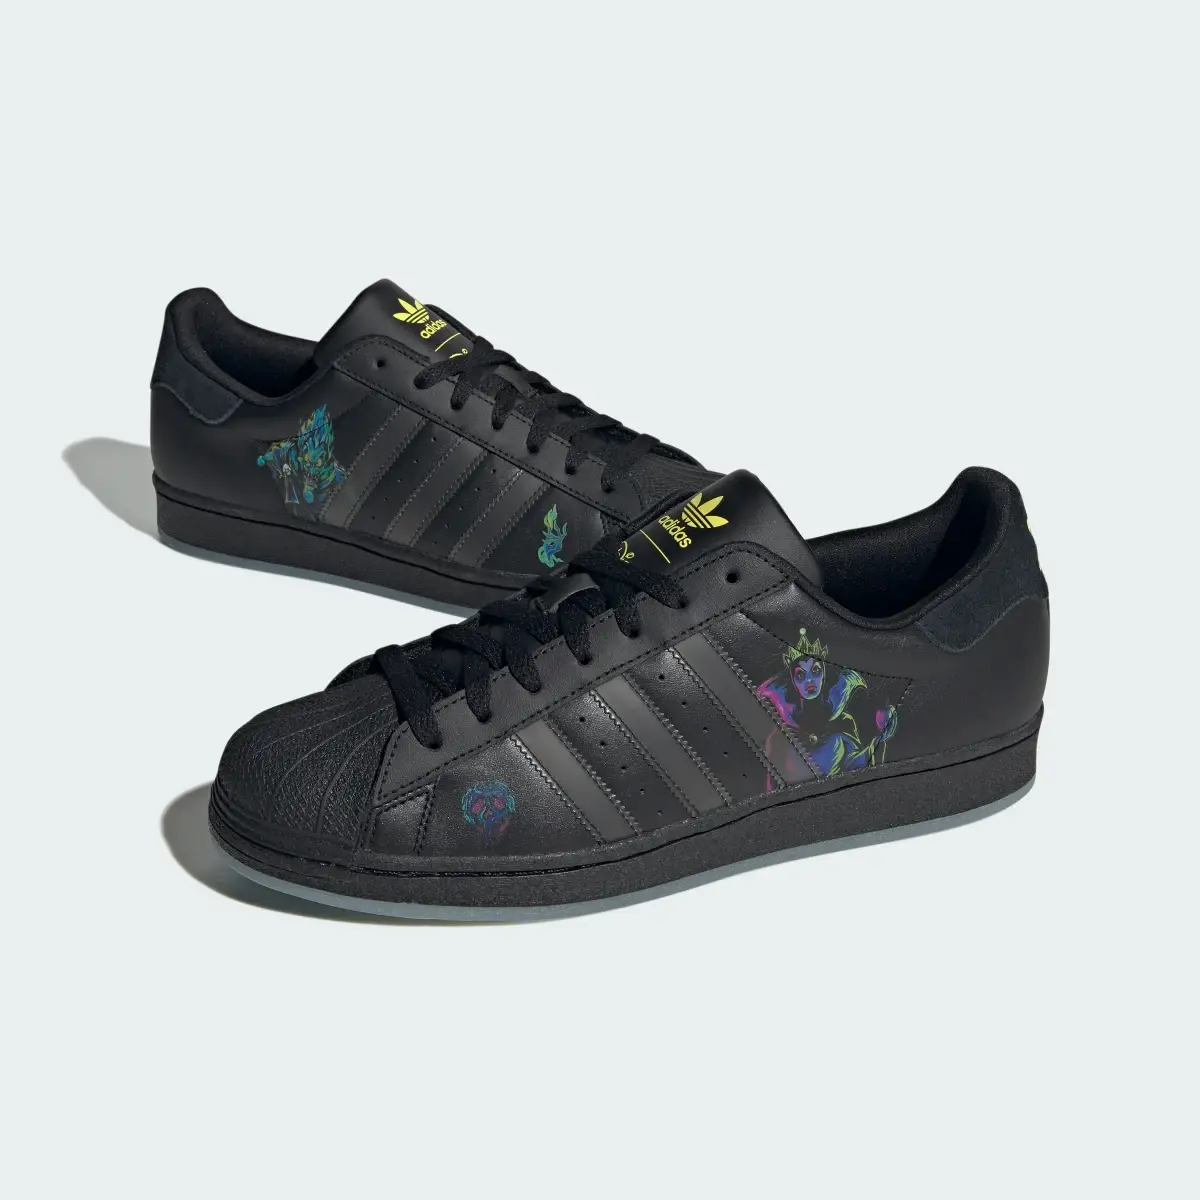 Adidas Superstar x Disney Shoes. 3